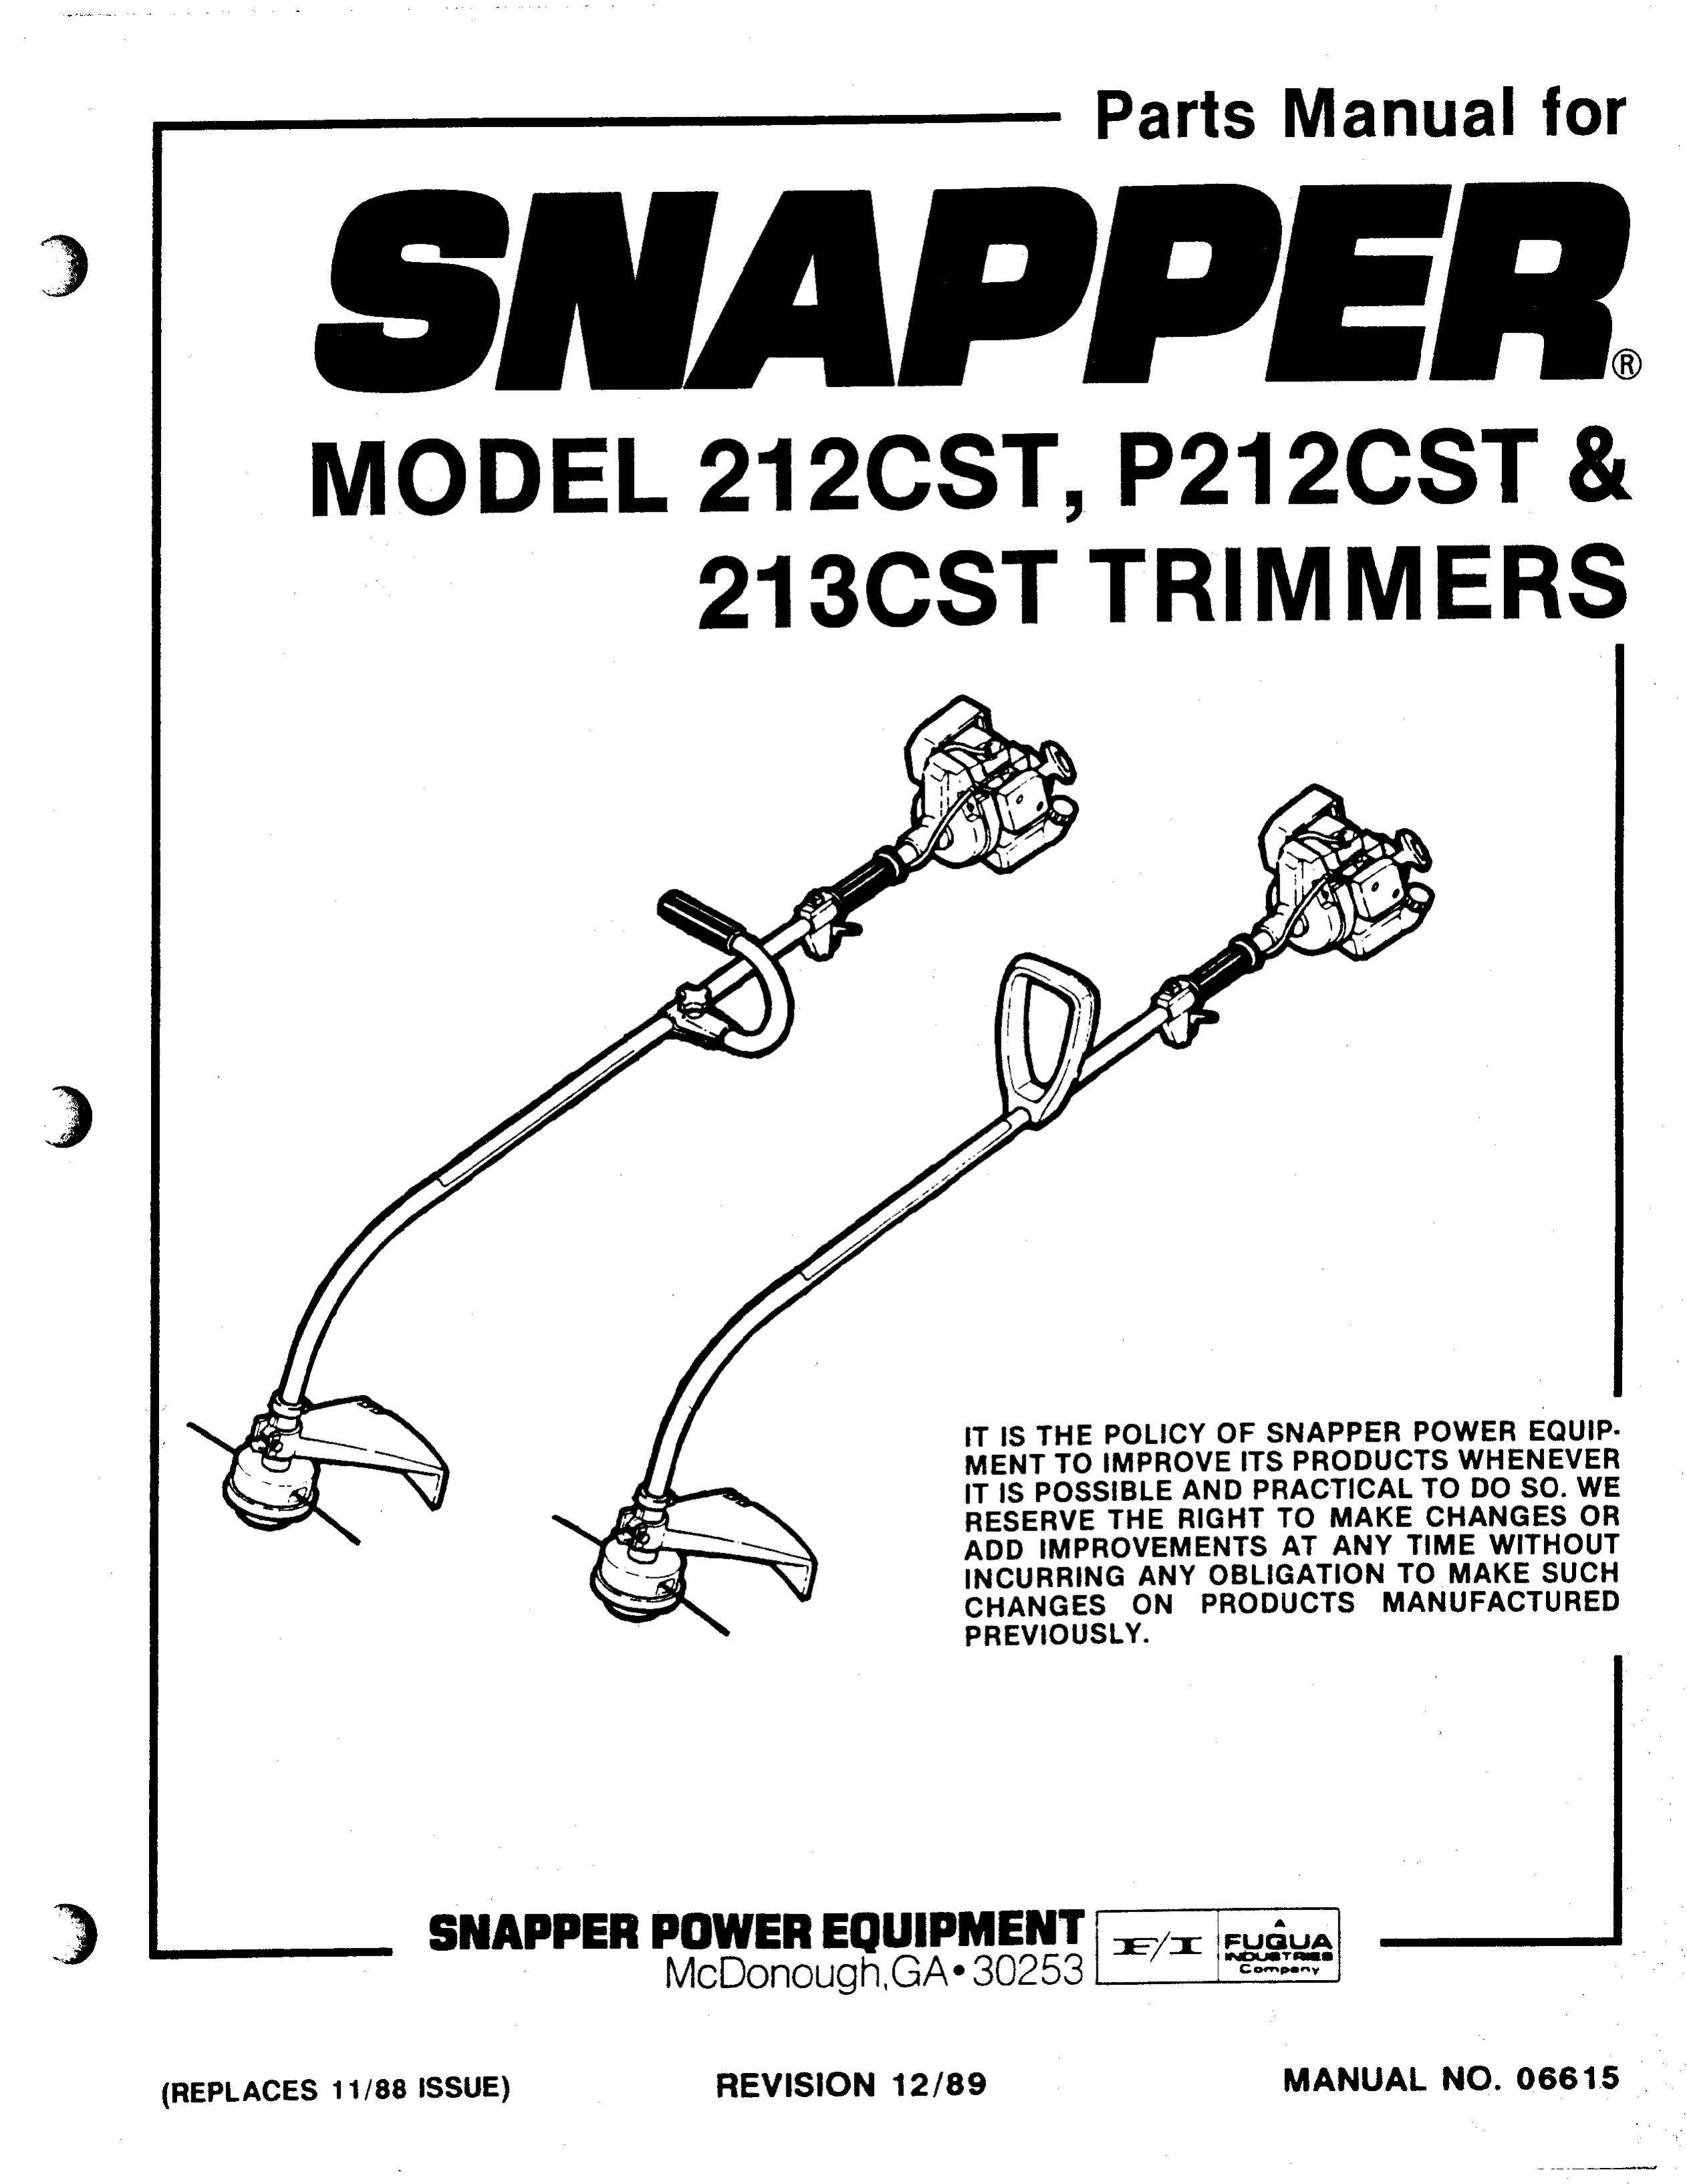 Snapper 212CST Trimmer User Manual